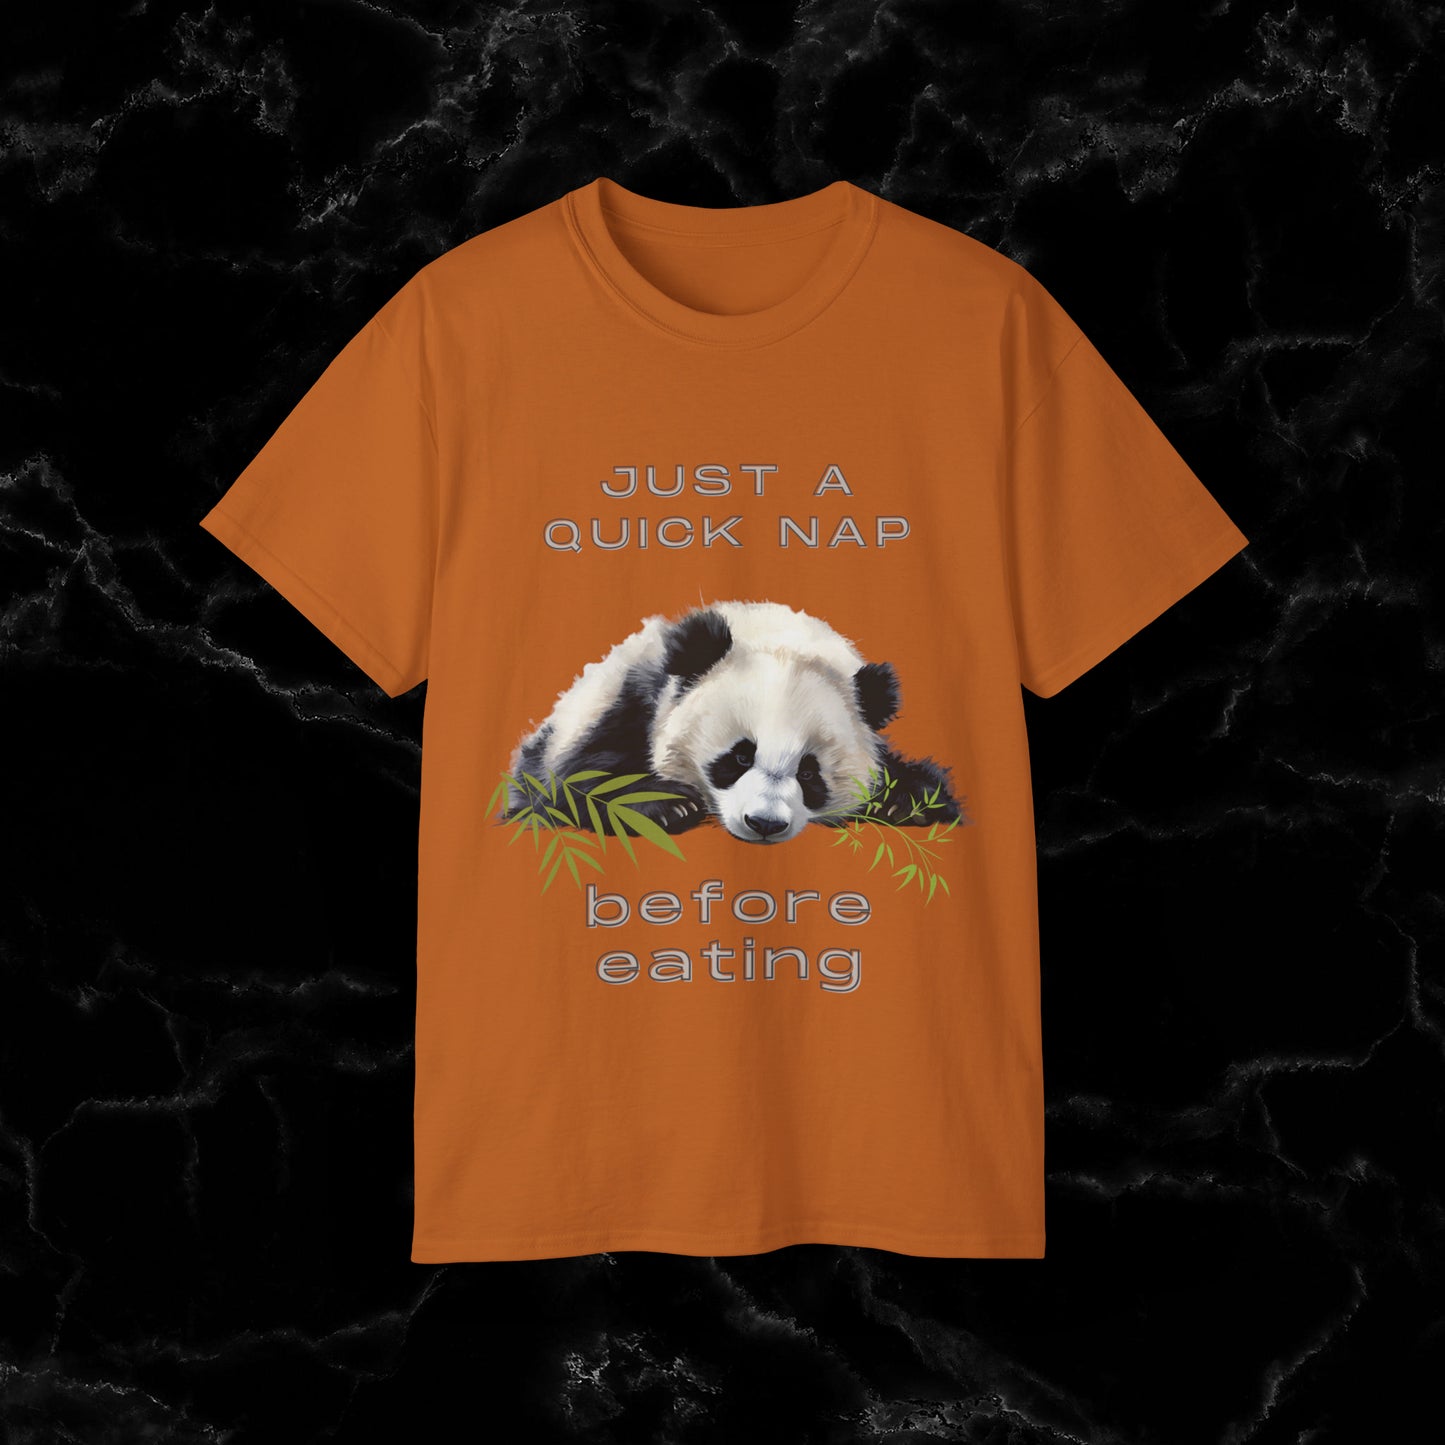 Nap Time Panda Unisex Funny Tee - Hilarious Panda Nap Design - Just a Quick Nap Before Eating T-Shirt Texas Orange M 